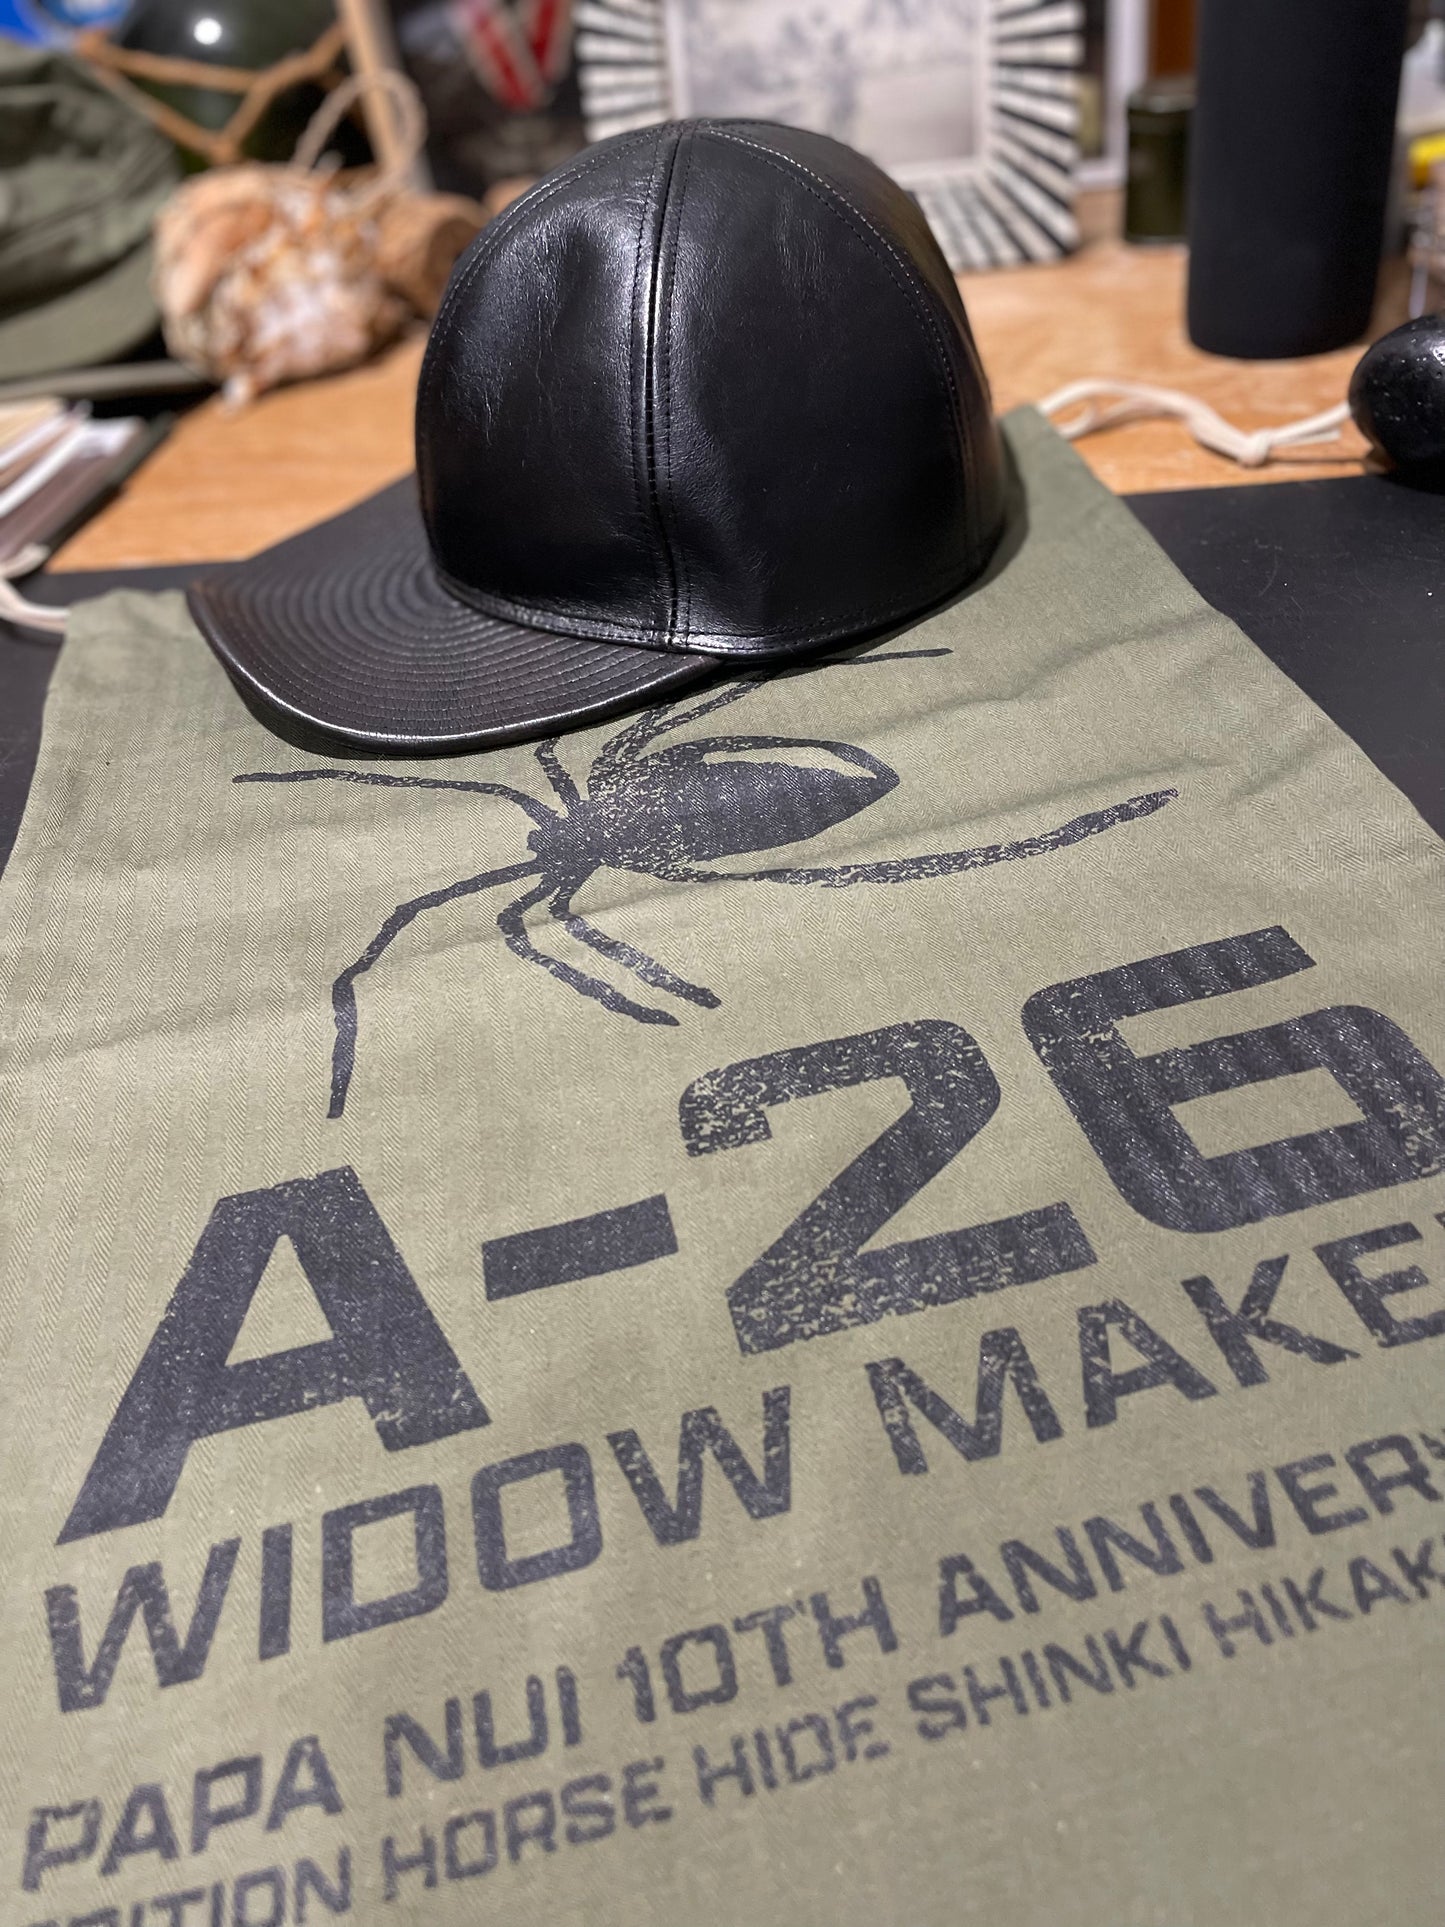 A-26 Shinki Horse Hide cap. 10th Anniversary Issue Widow Maker